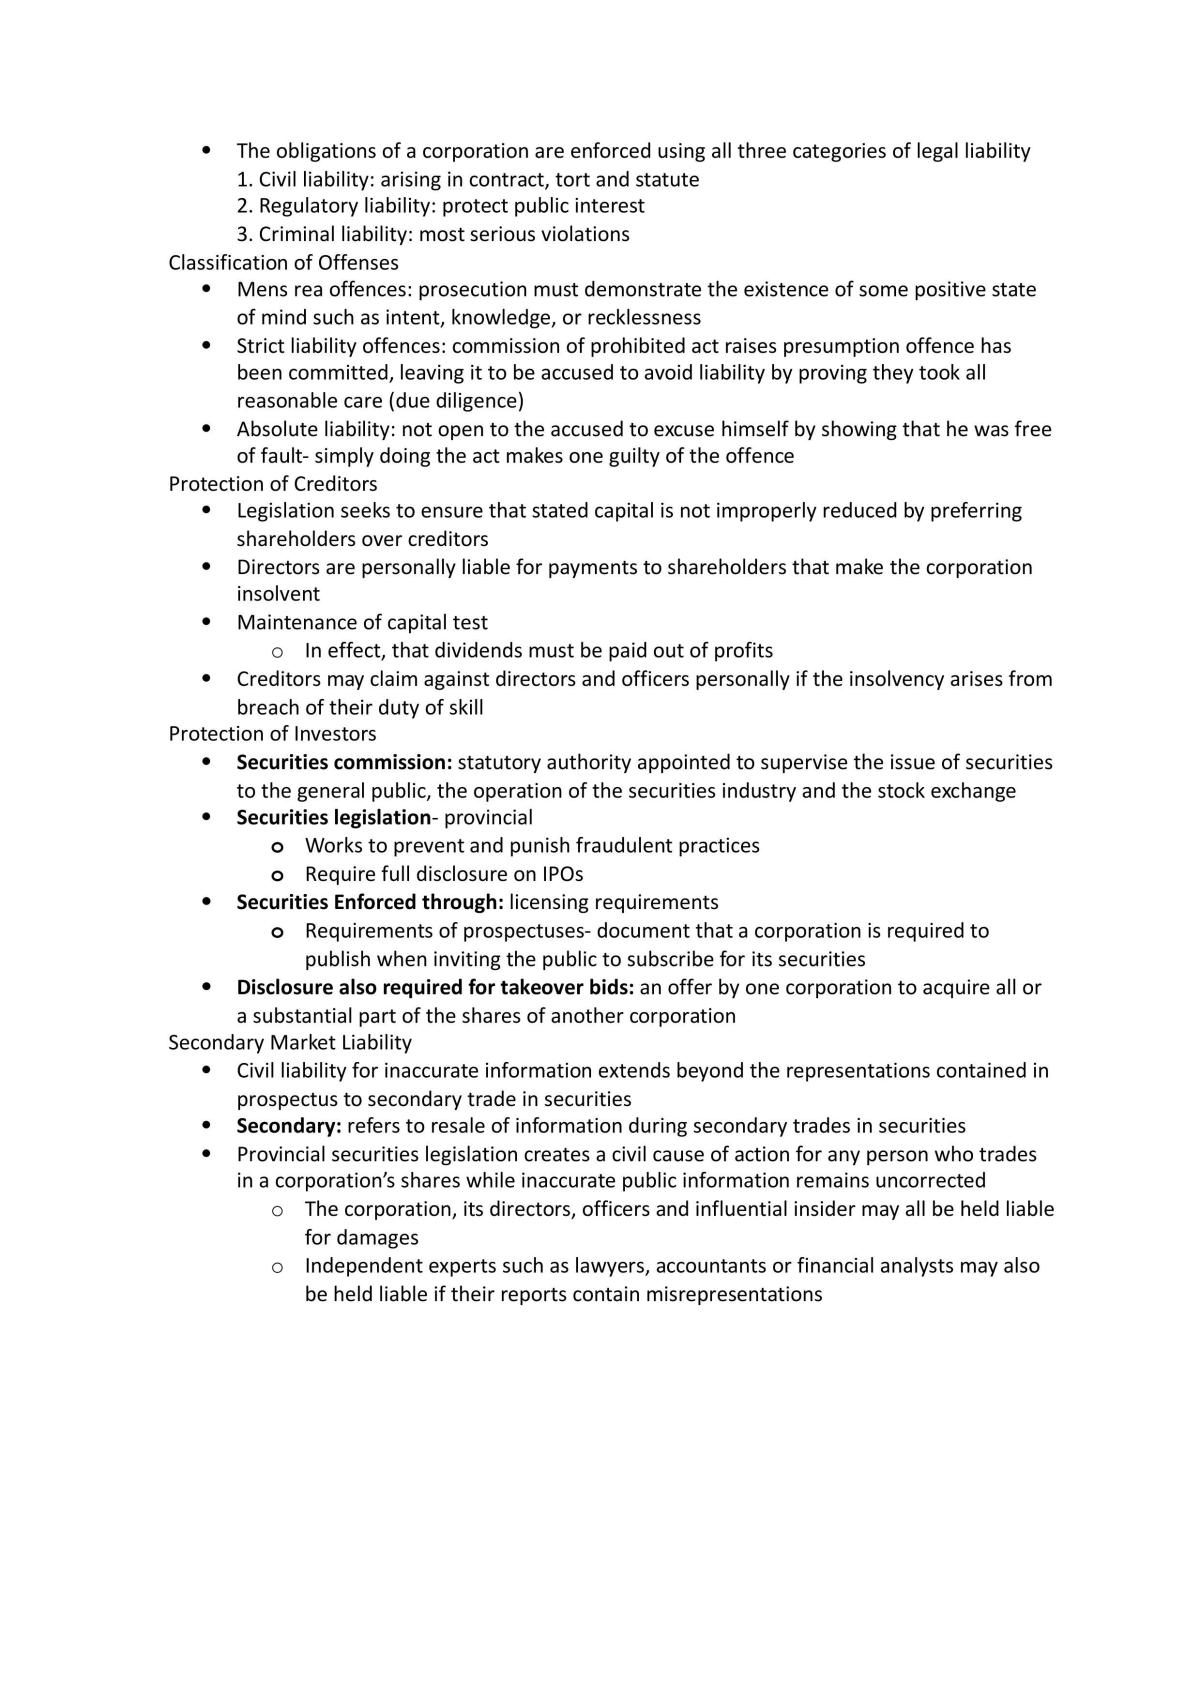 BU231 Exam Notes - Page 25